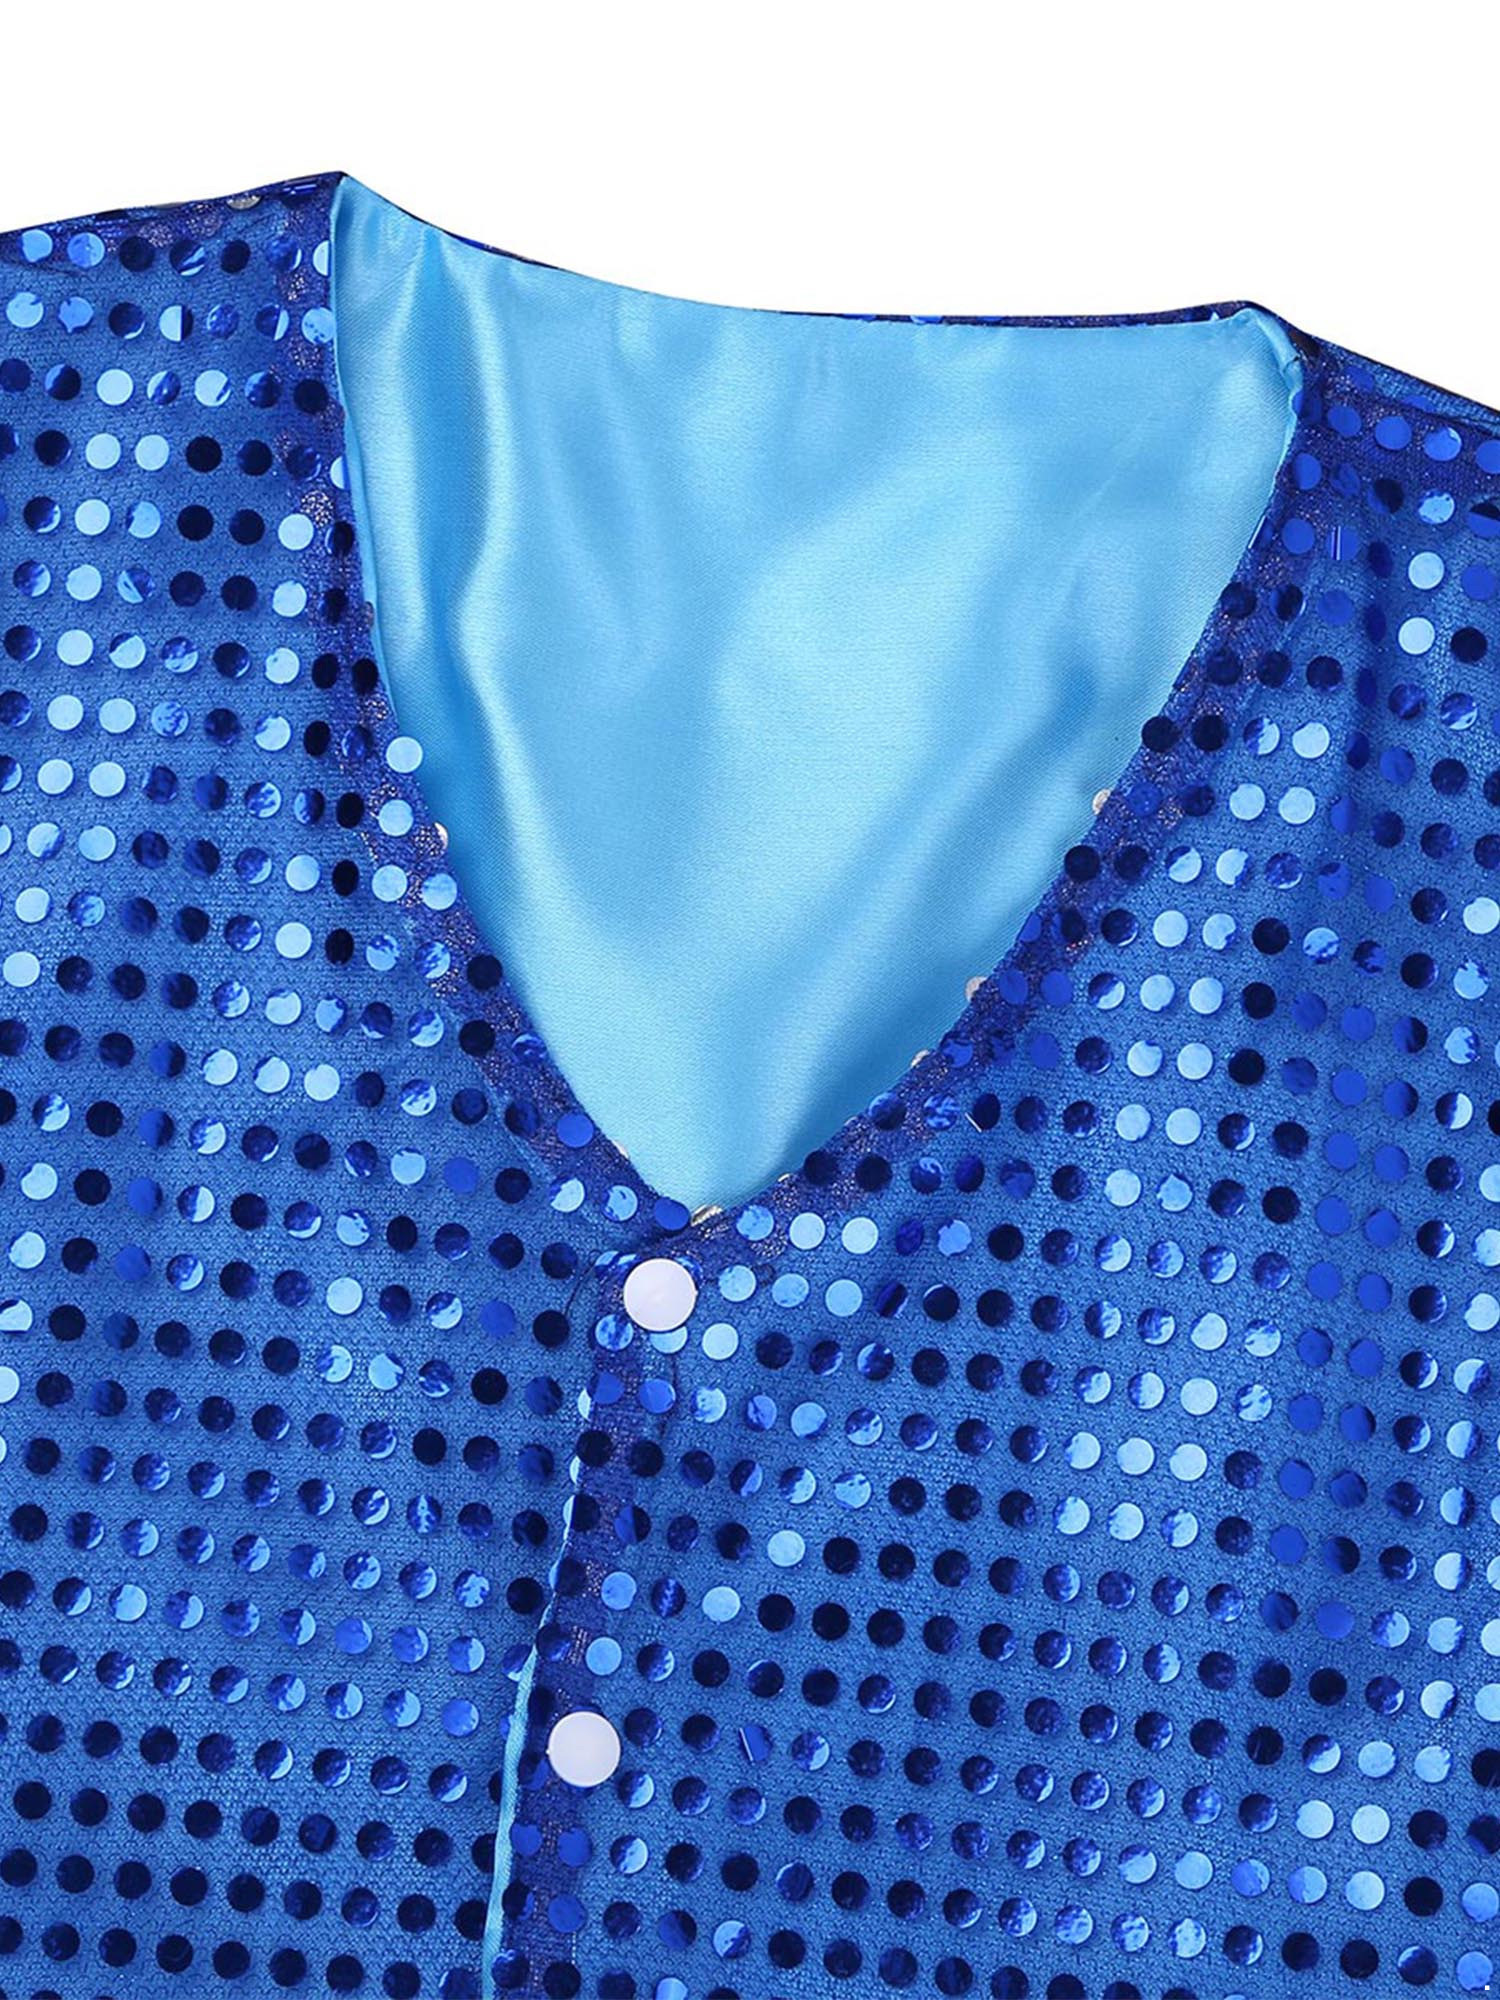 IEFIEL Kids Boys Sparkle Sequins Button Down Vest with Hat Dance Outfit Set Hip Hop Jazz Stage Performance Costume Blue 7-8 - image 5 of 7